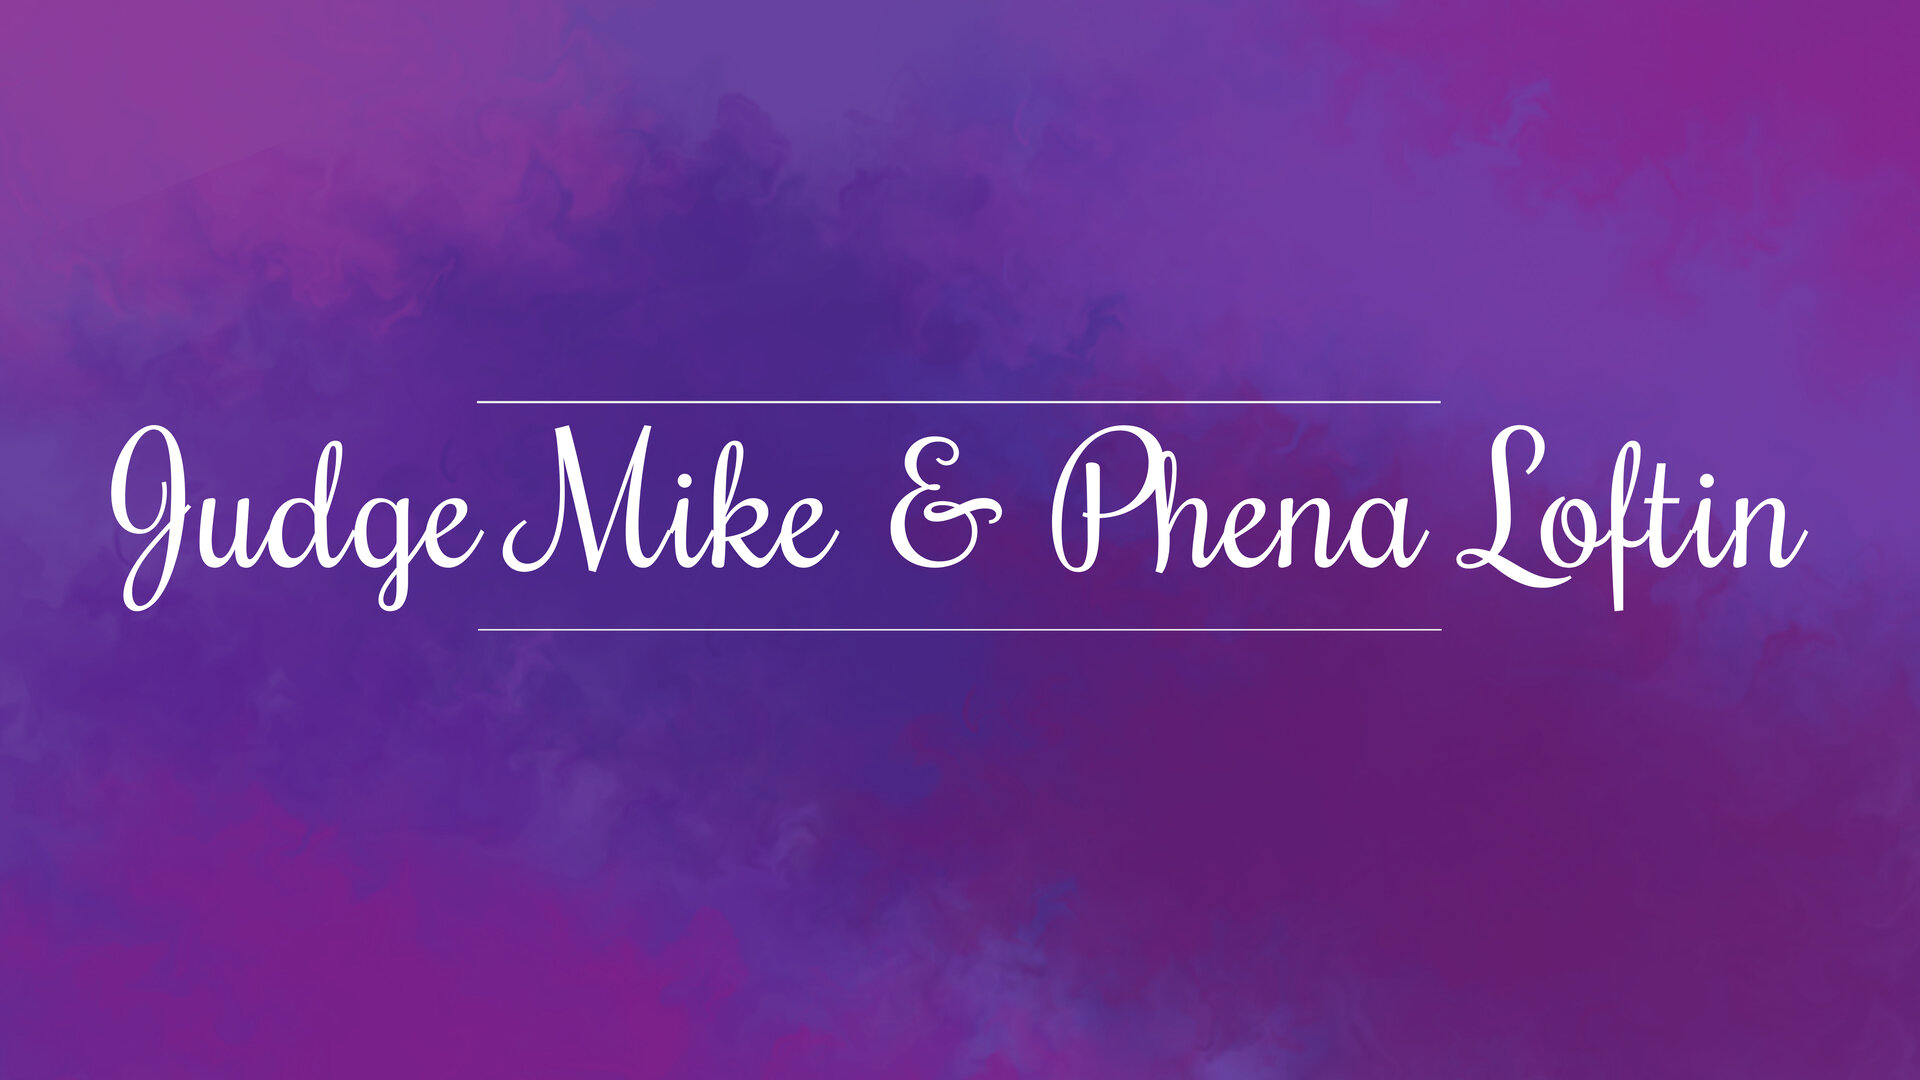 Mike and Phena.jpg